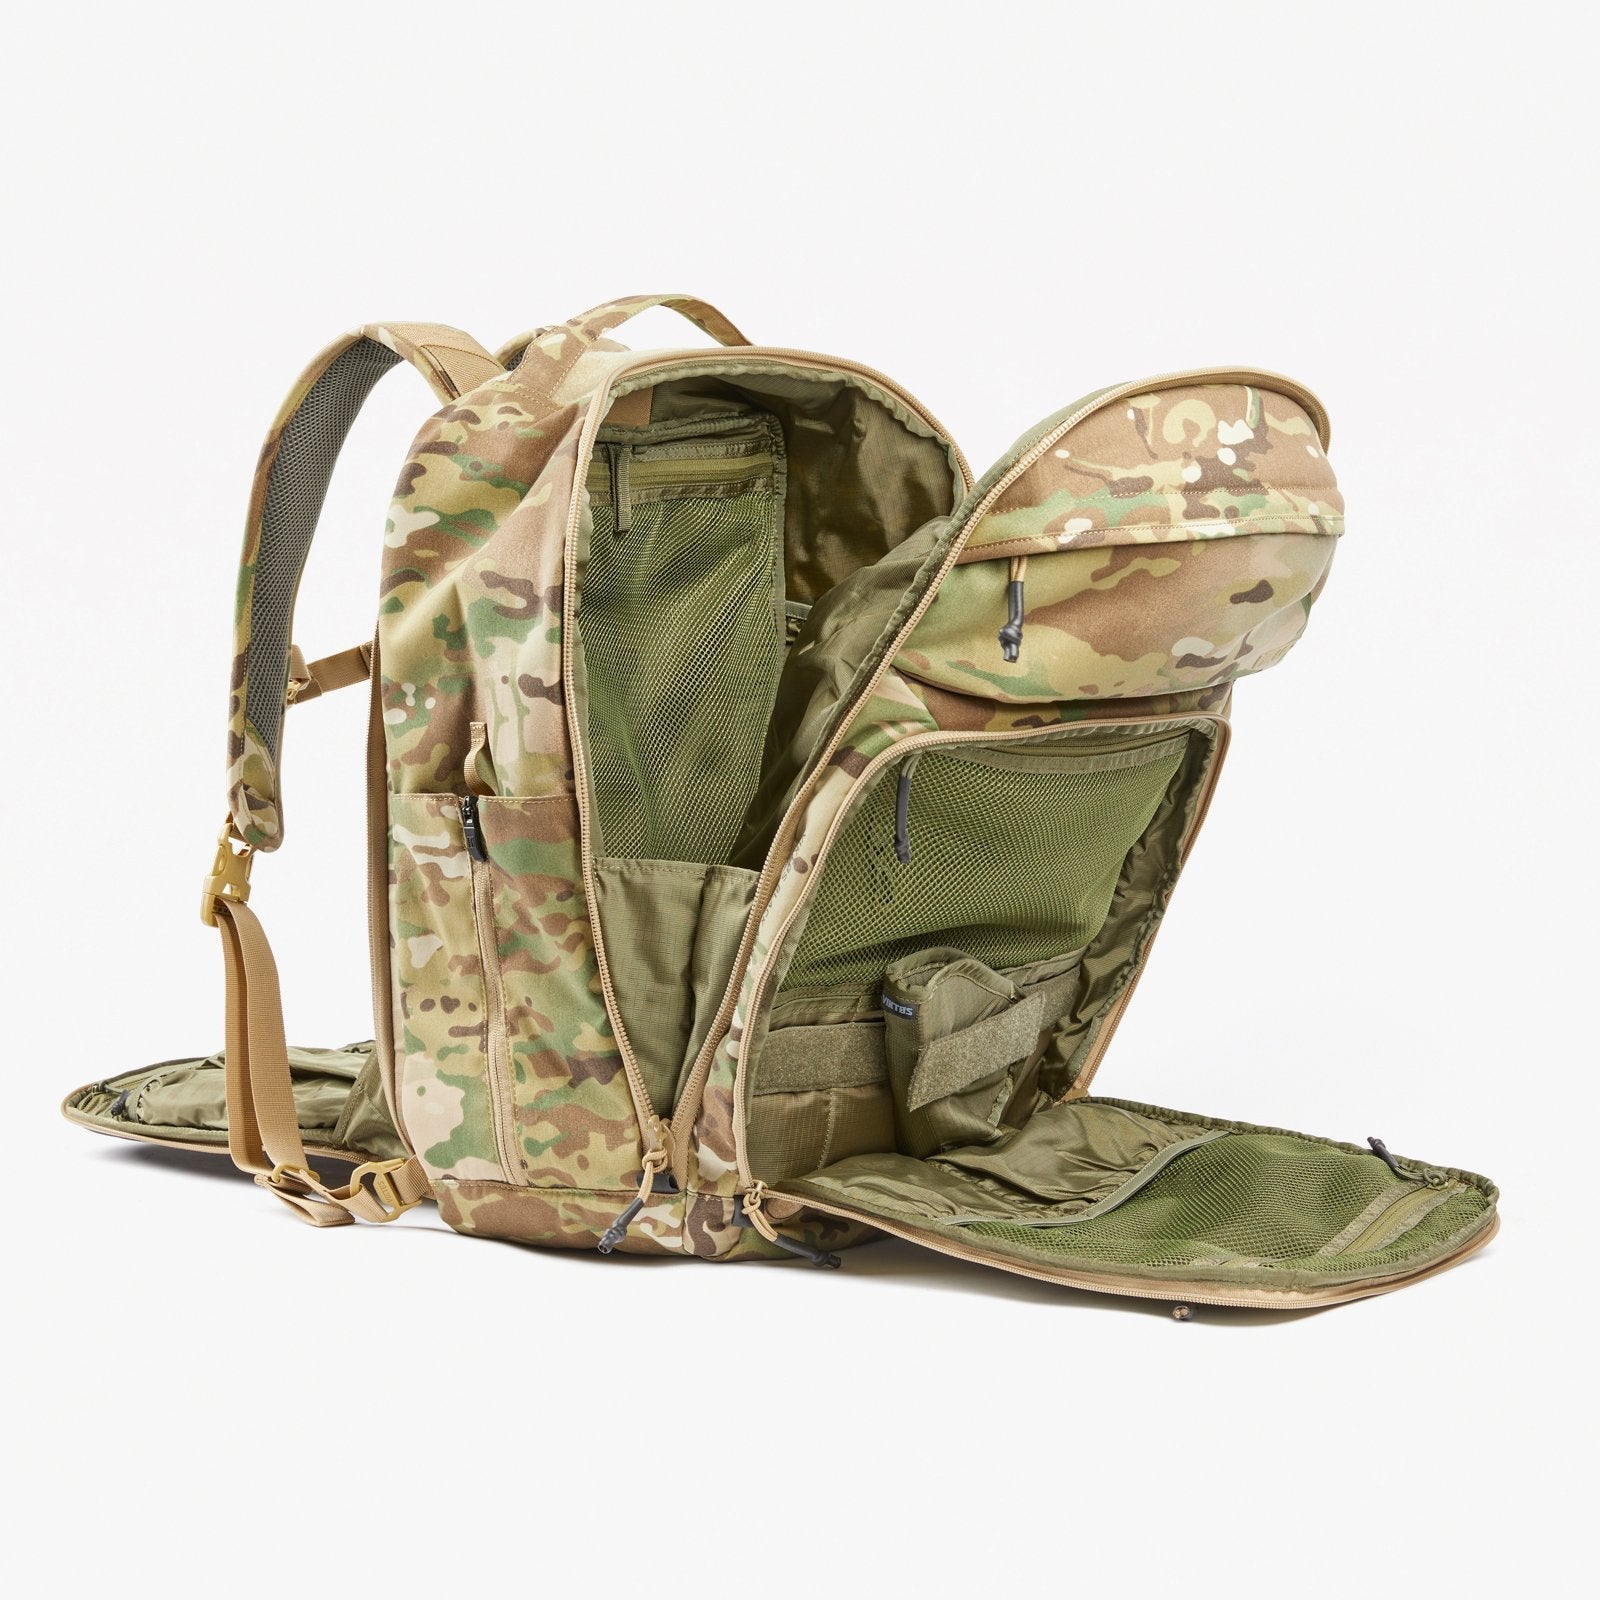 VIKTOS Perimeter 40L Backpack MultiCam Black Bags, Packs and Cases VIKTOS Tactical Gear Supplier Tactical Distributors Australia